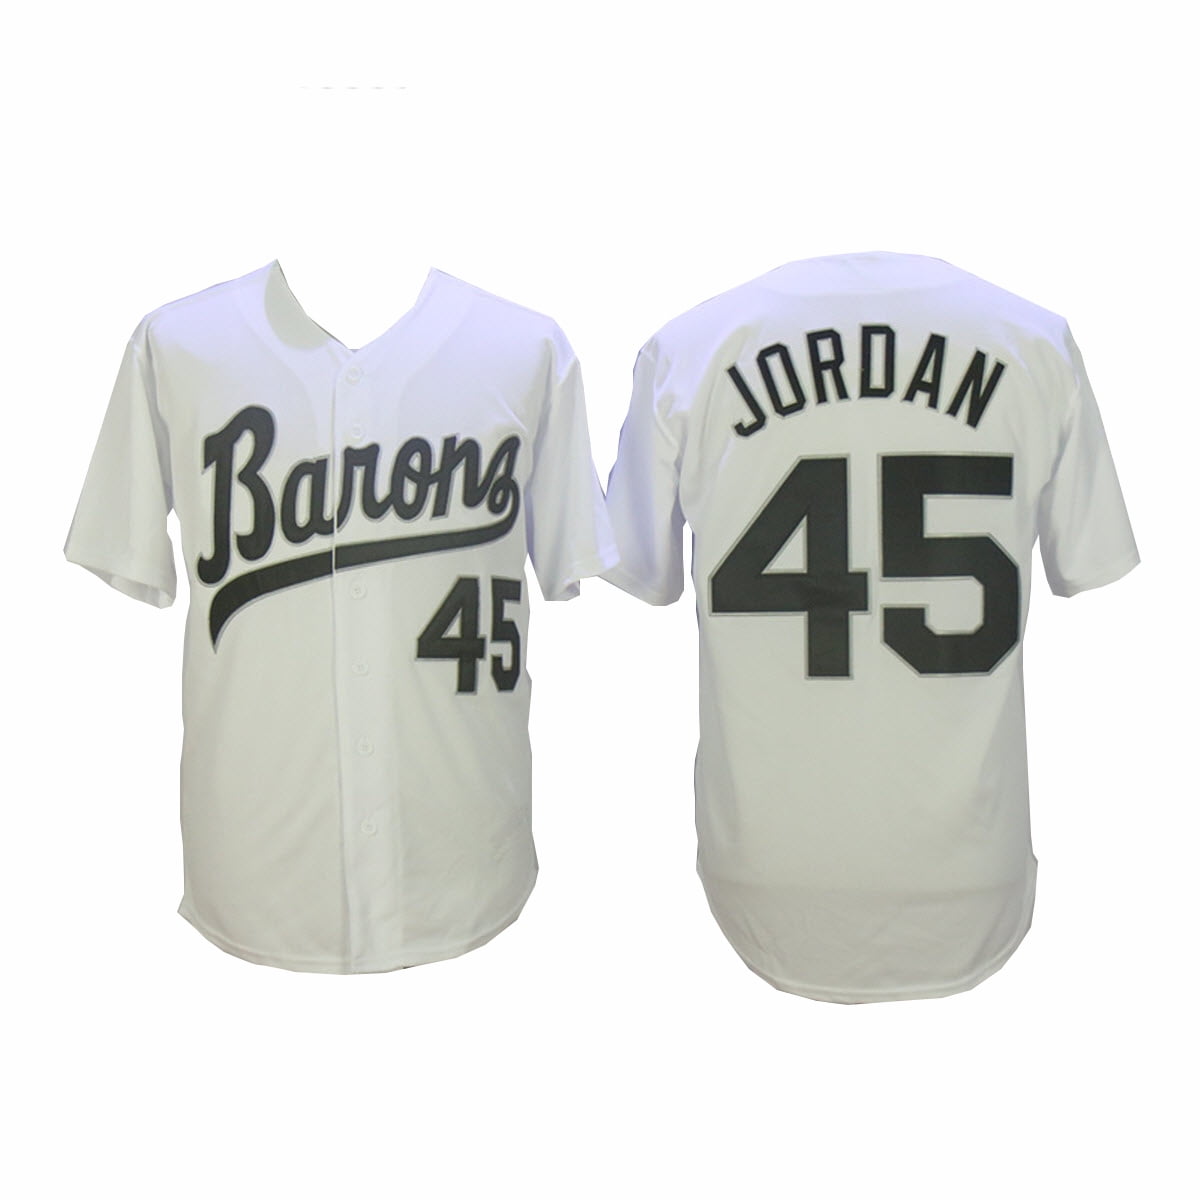 Michael Jordan 45 Barons White Baseball Jersey Birmingham Uniform